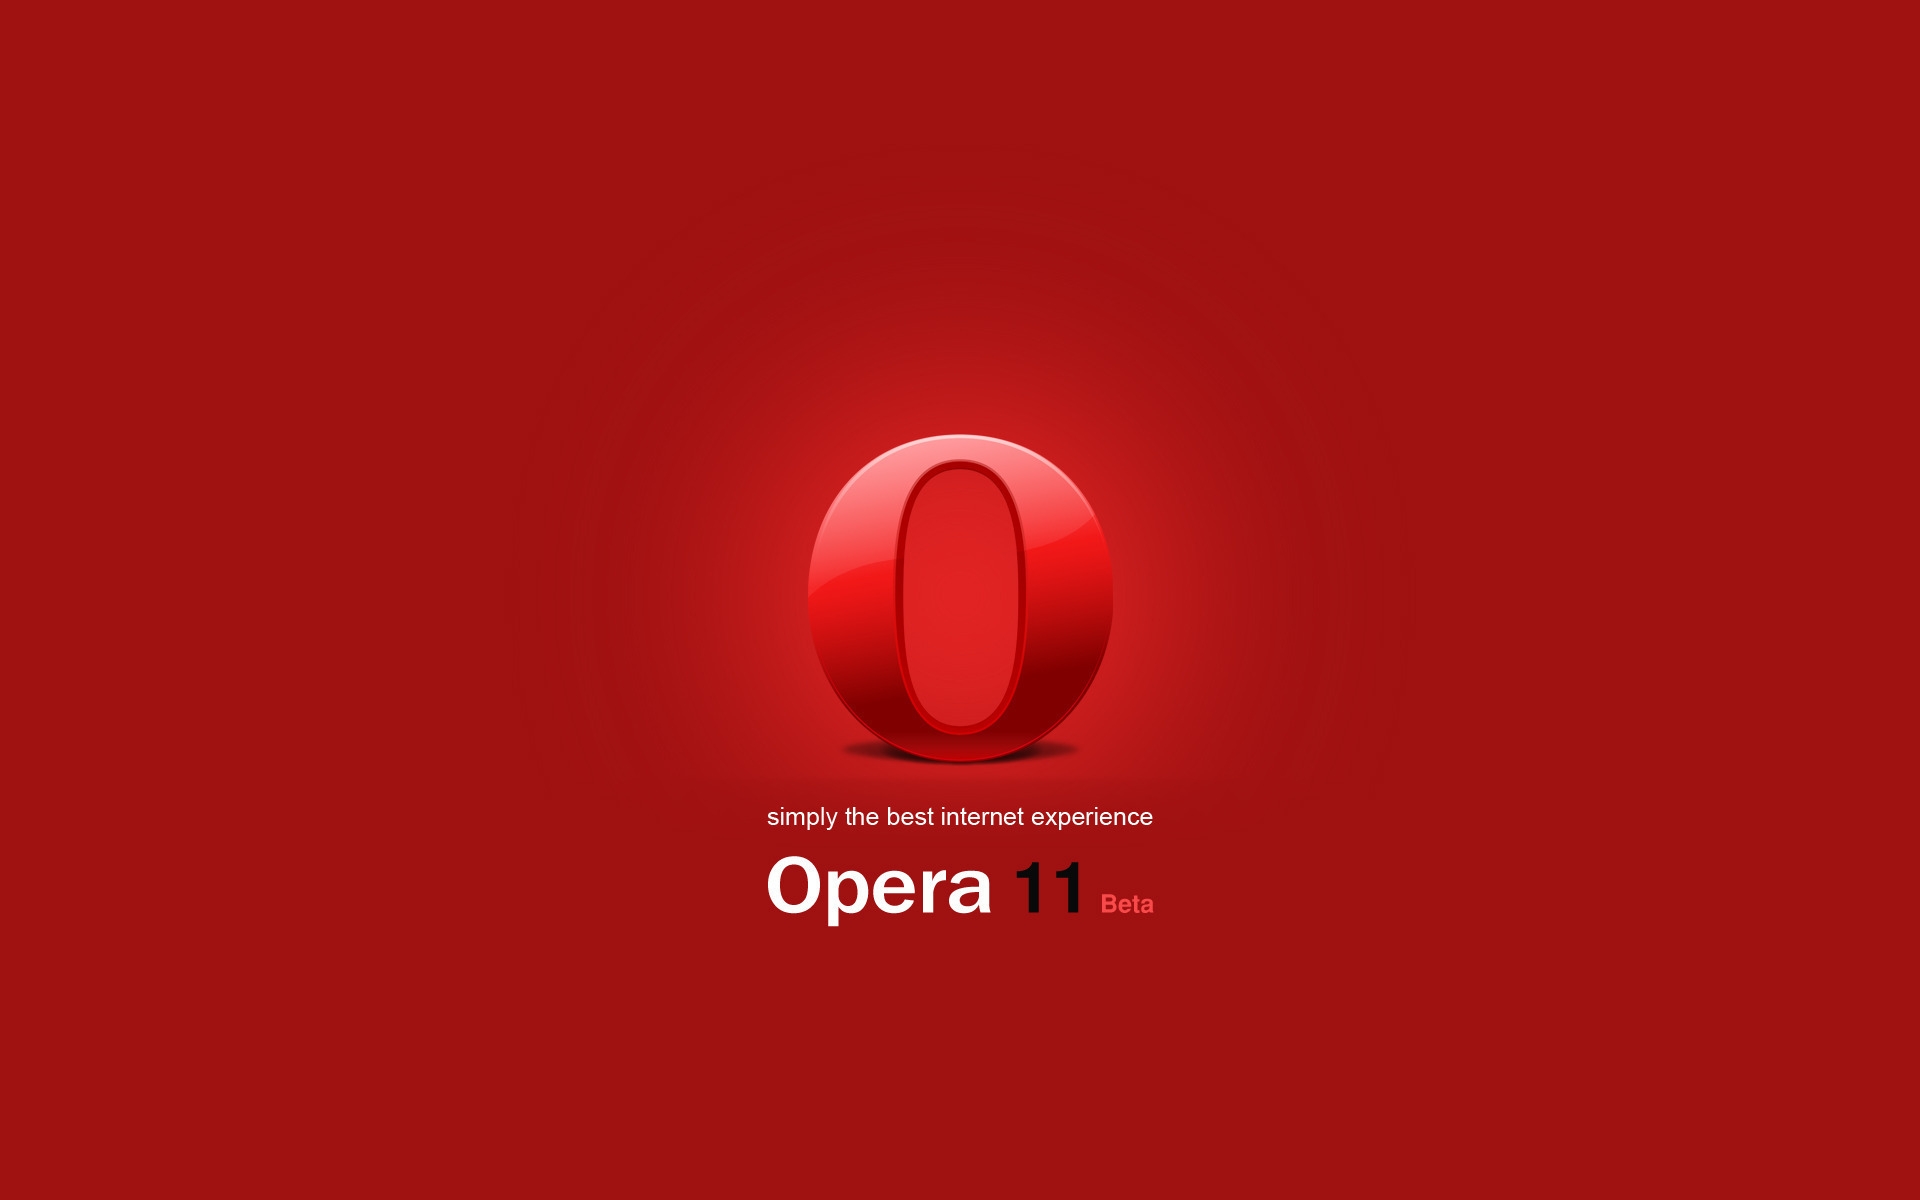 Opera 11 Beta for 1920 x 1200 widescreen resolution